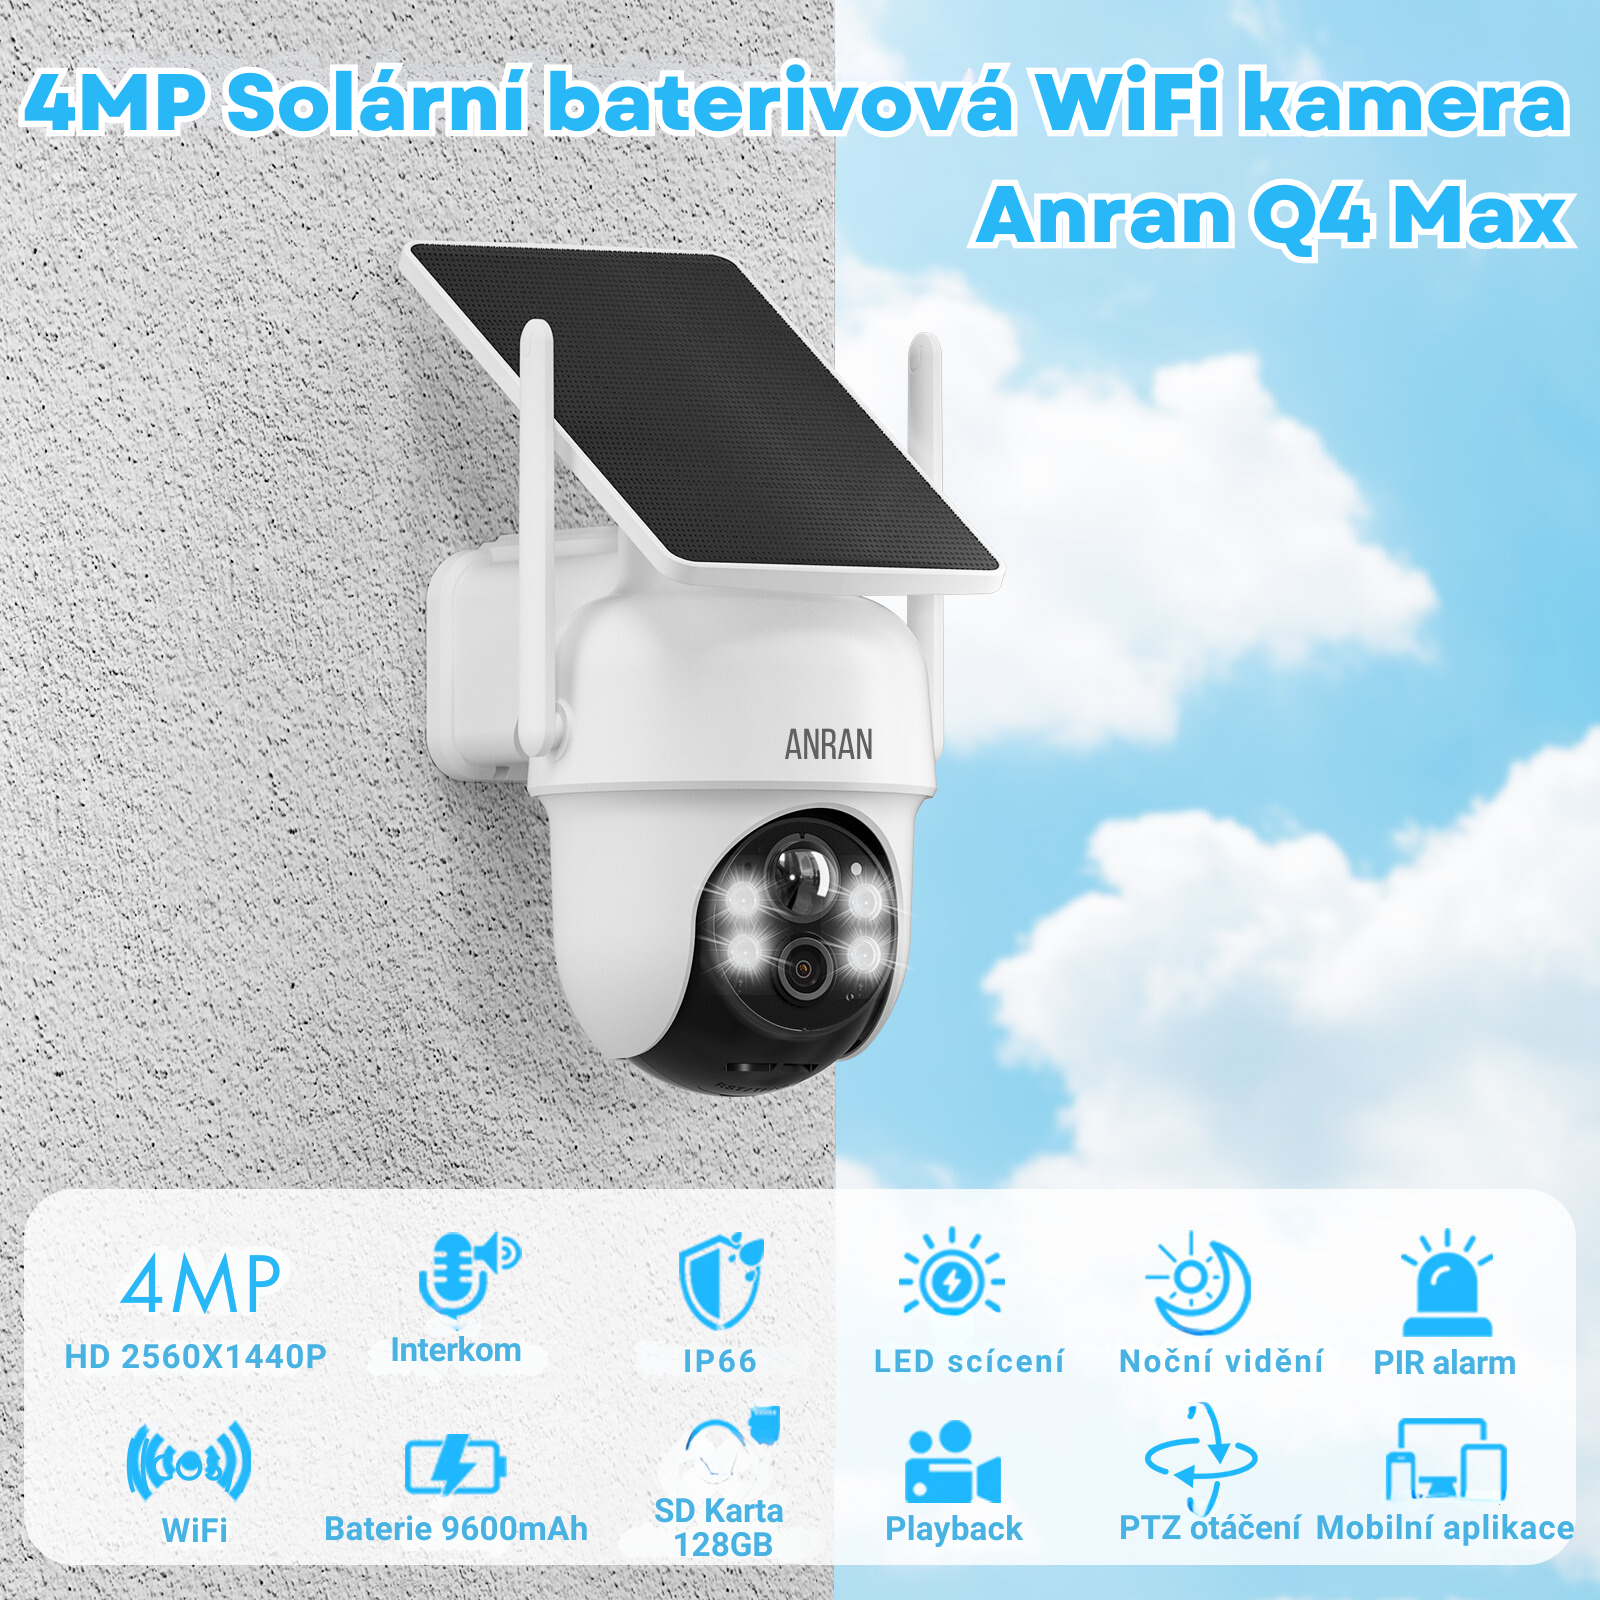 4MP Solární baterivová WiFi kamera Anran Q4 Max